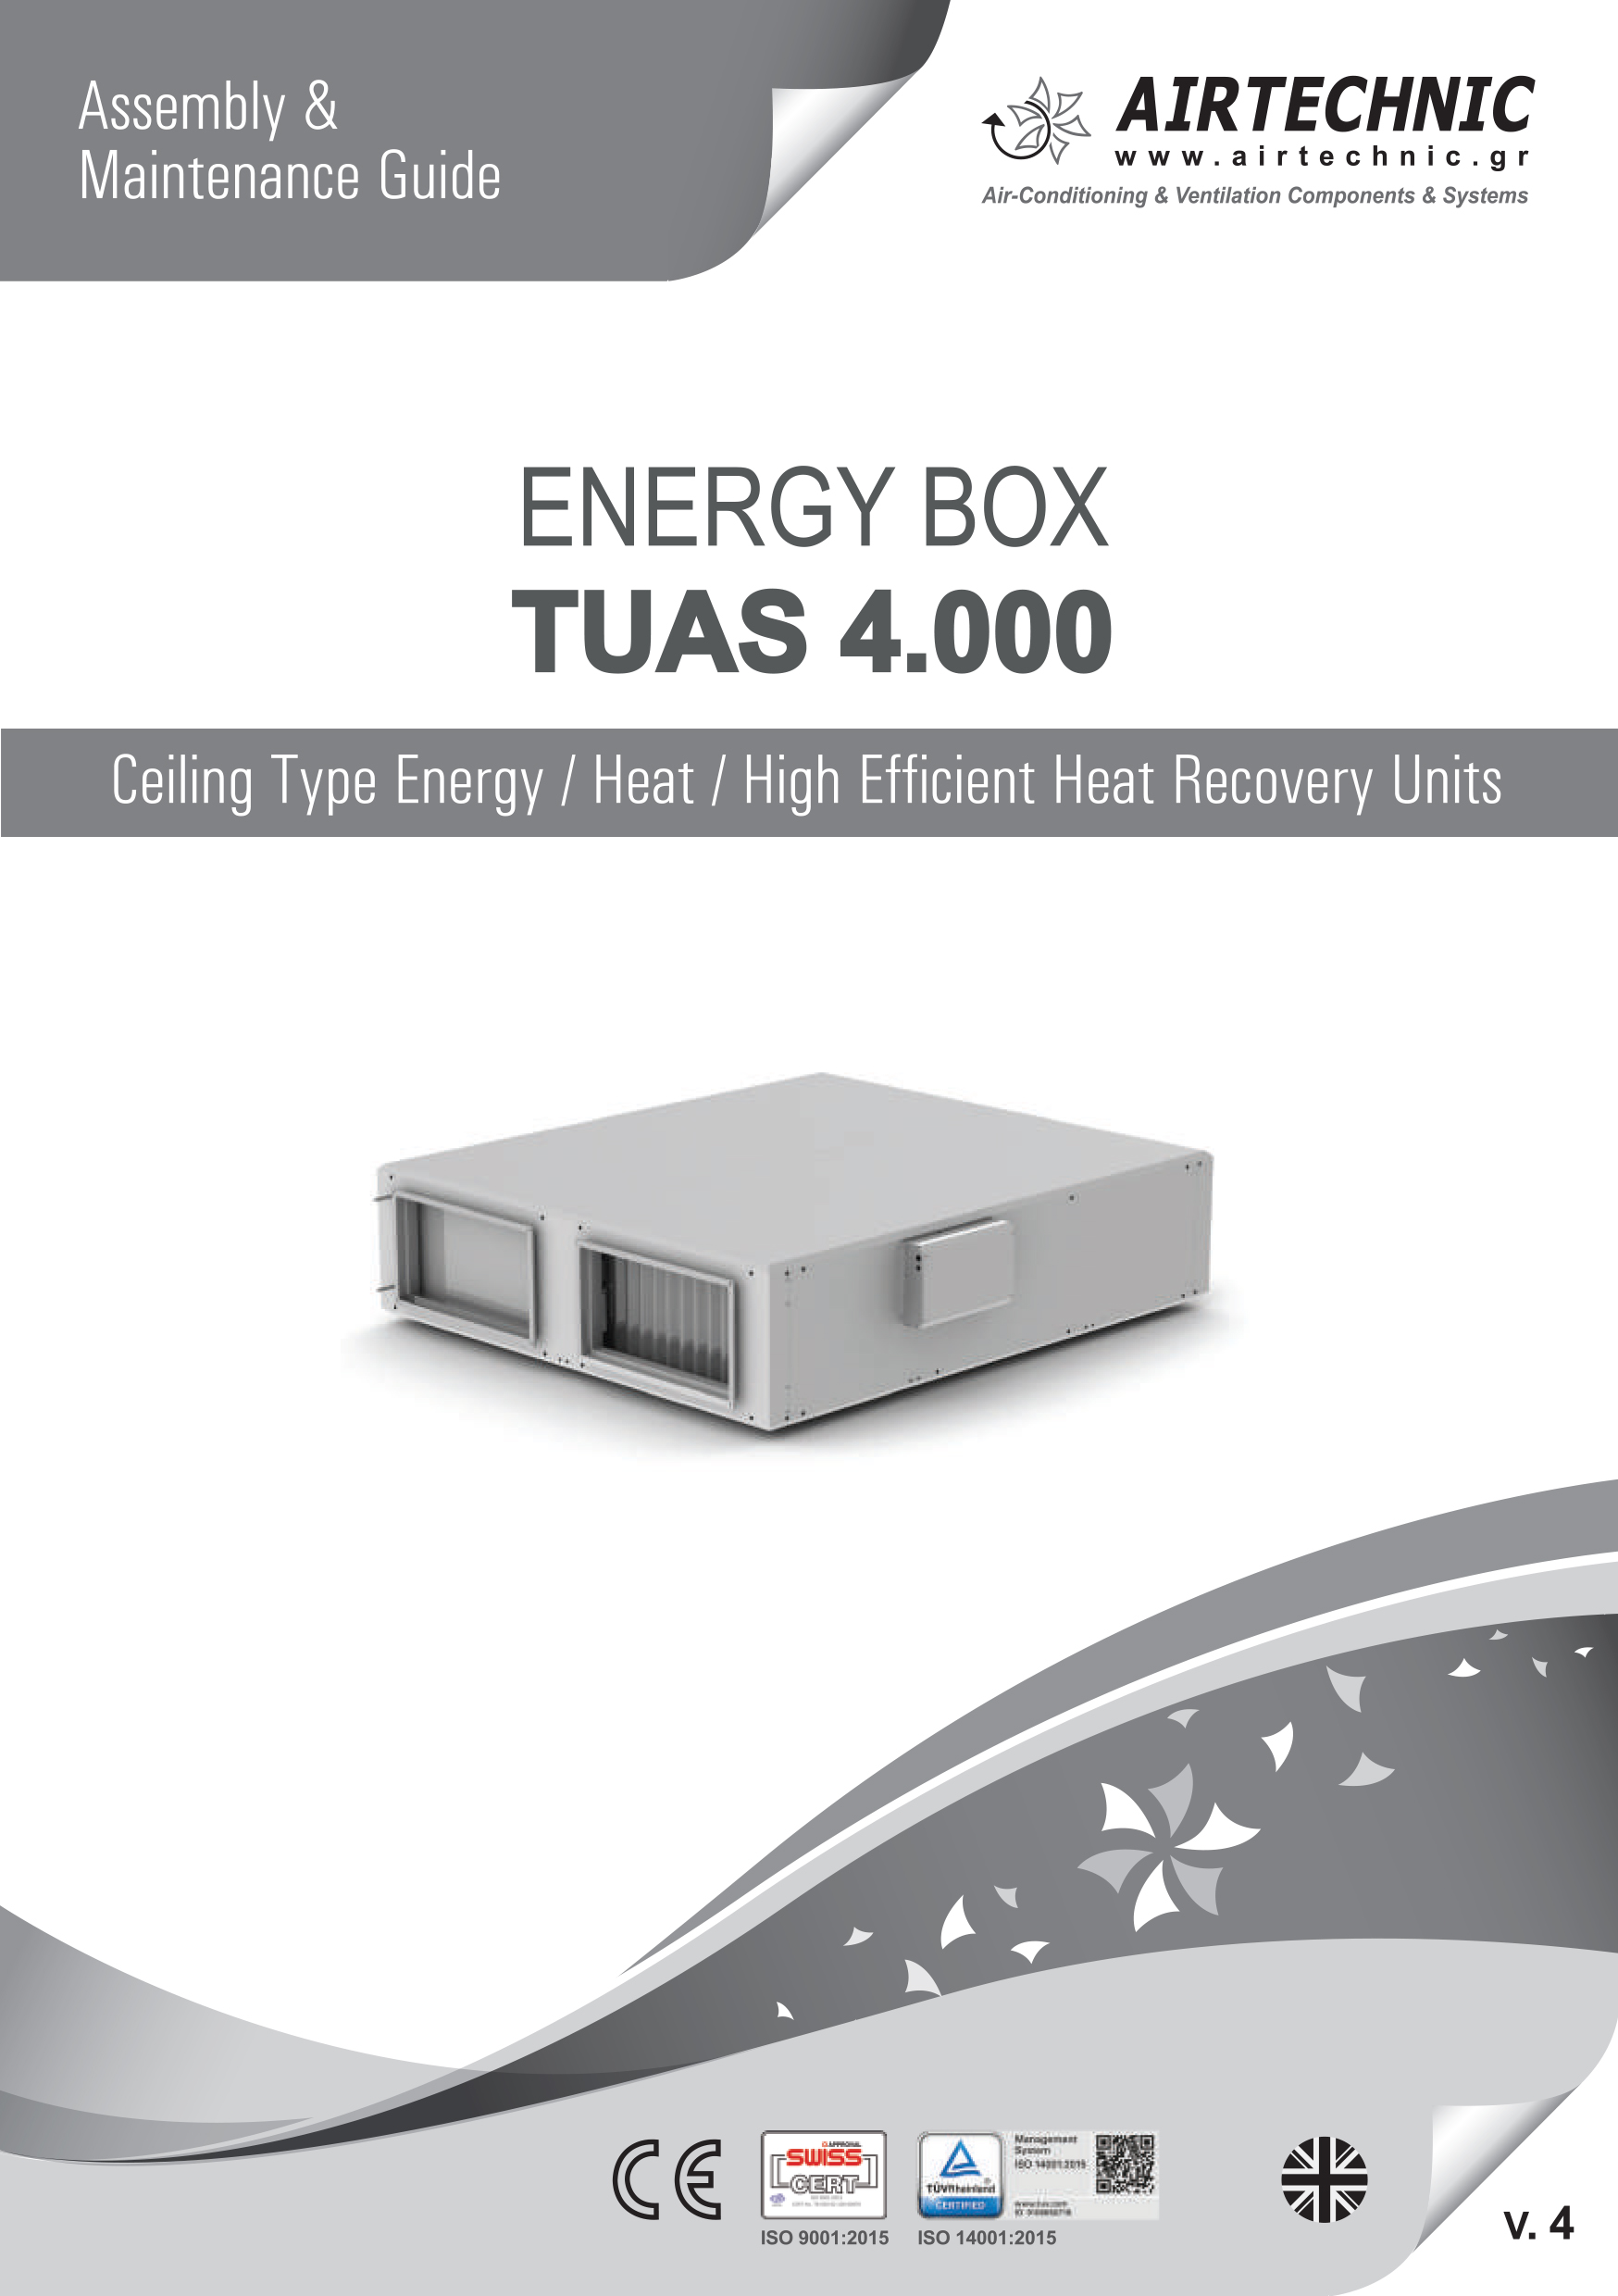 USER's MANUAL "ENERGY BOX TUAS 4.000"